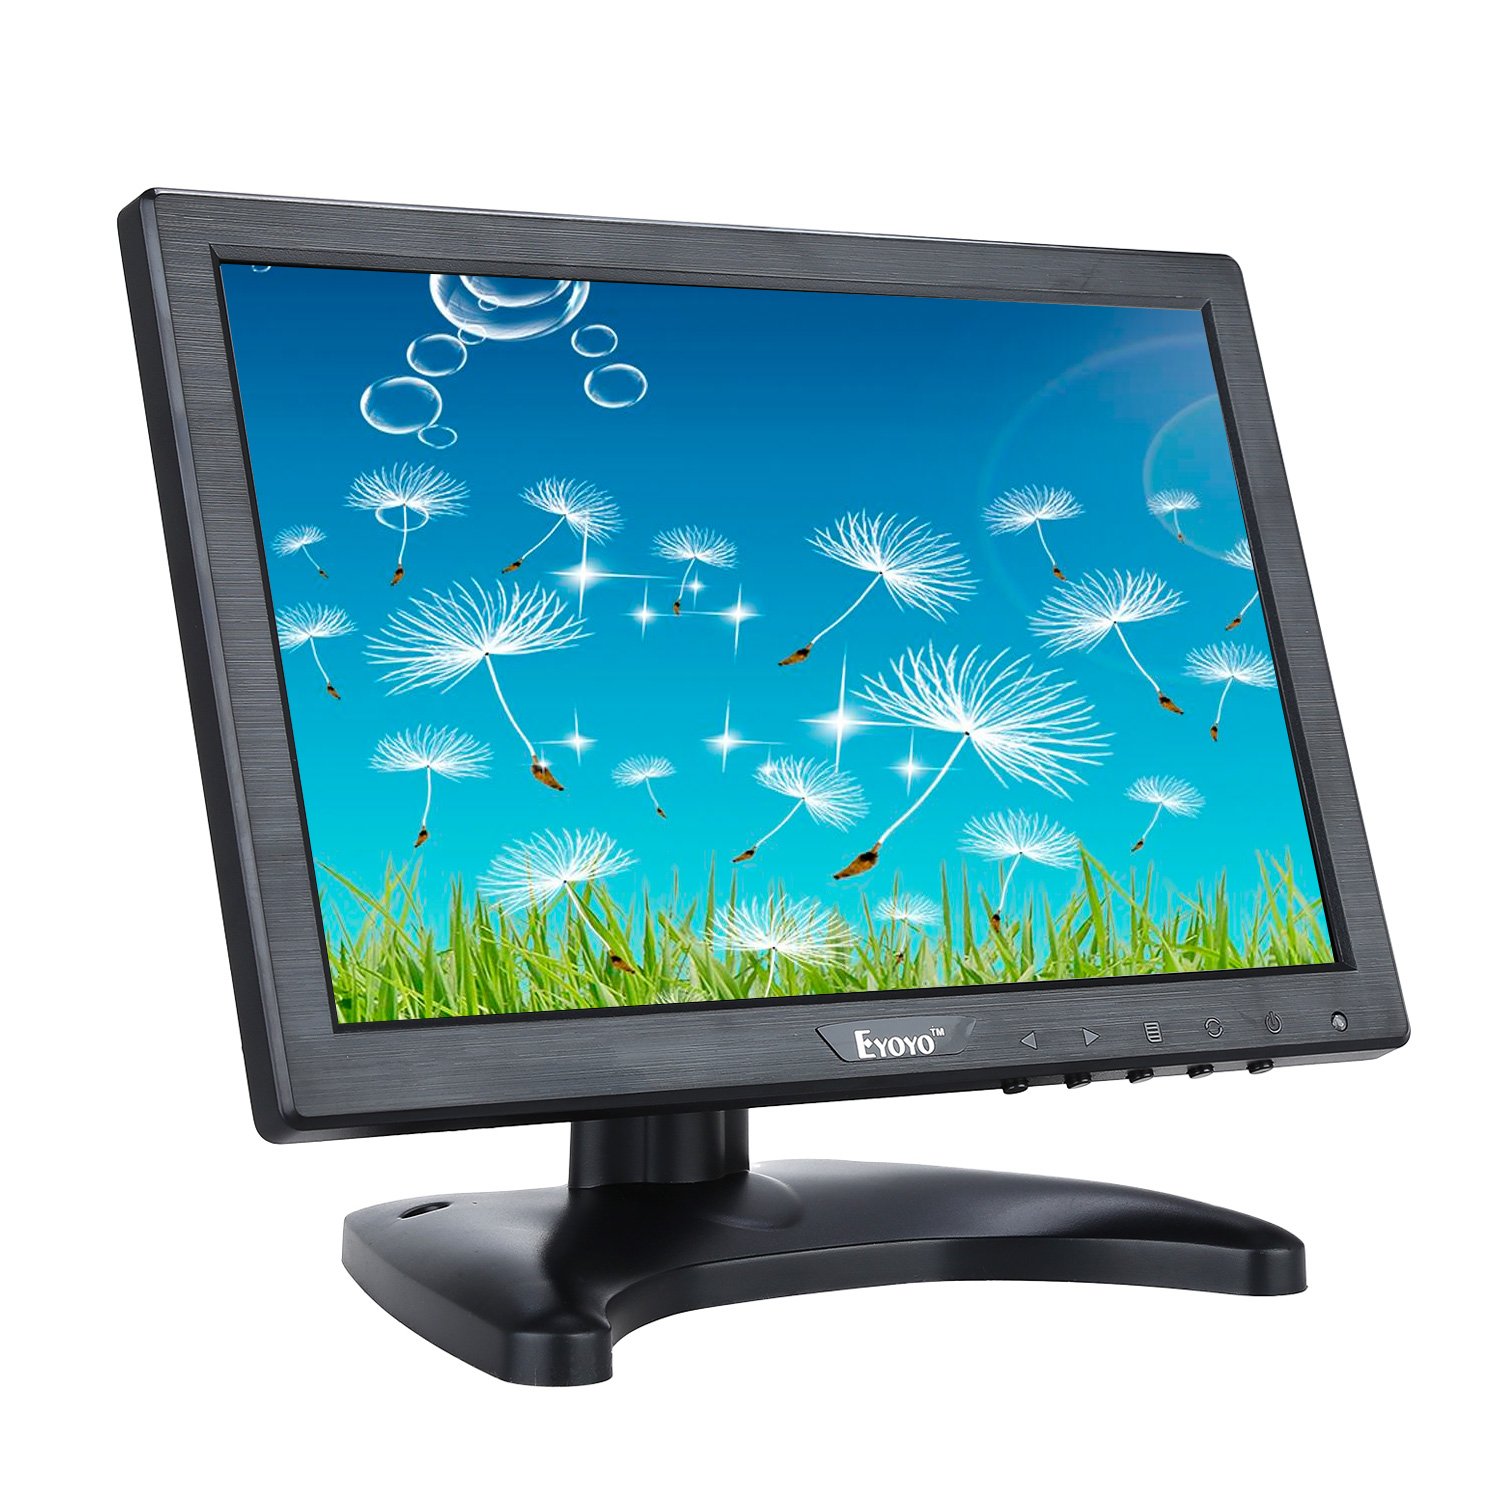 Eyoyo 10 Inch IPS LCD Monitor 1280x800 Resolution Support HDMI VGA BNC